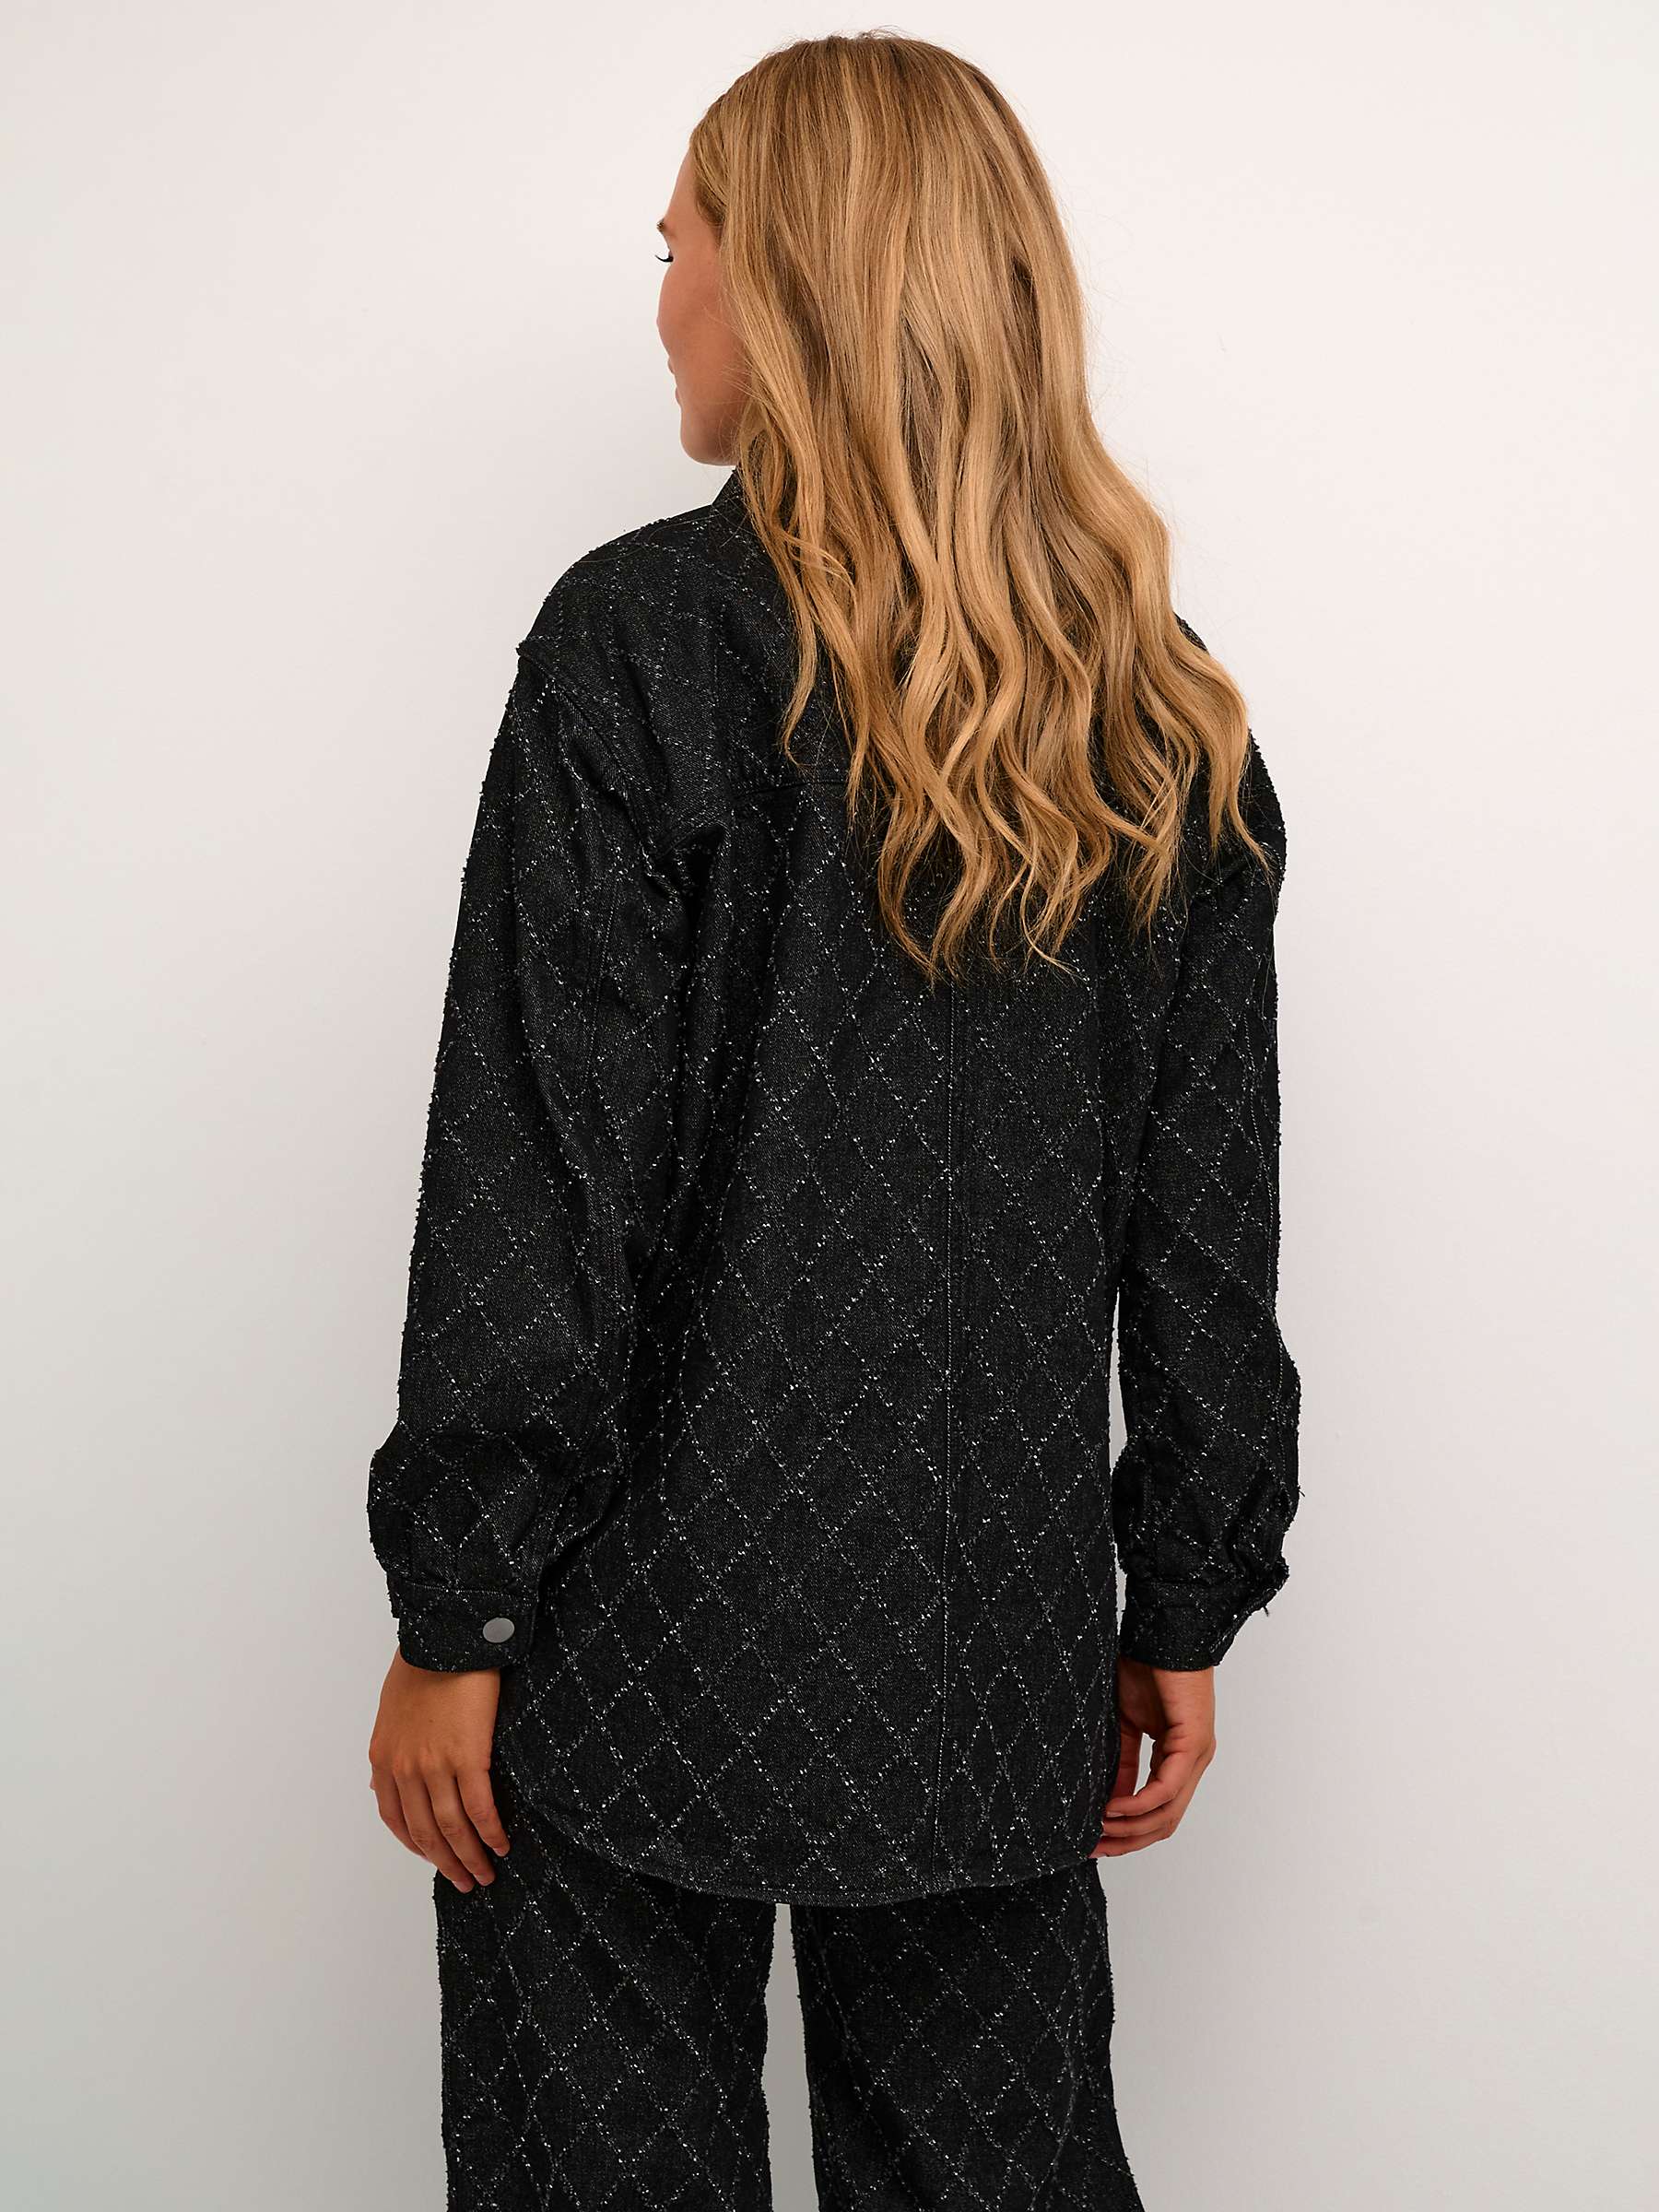 Buy KAFFE Olivia Textured Pattern Denim Shirt, Dark Grey Online at johnlewis.com